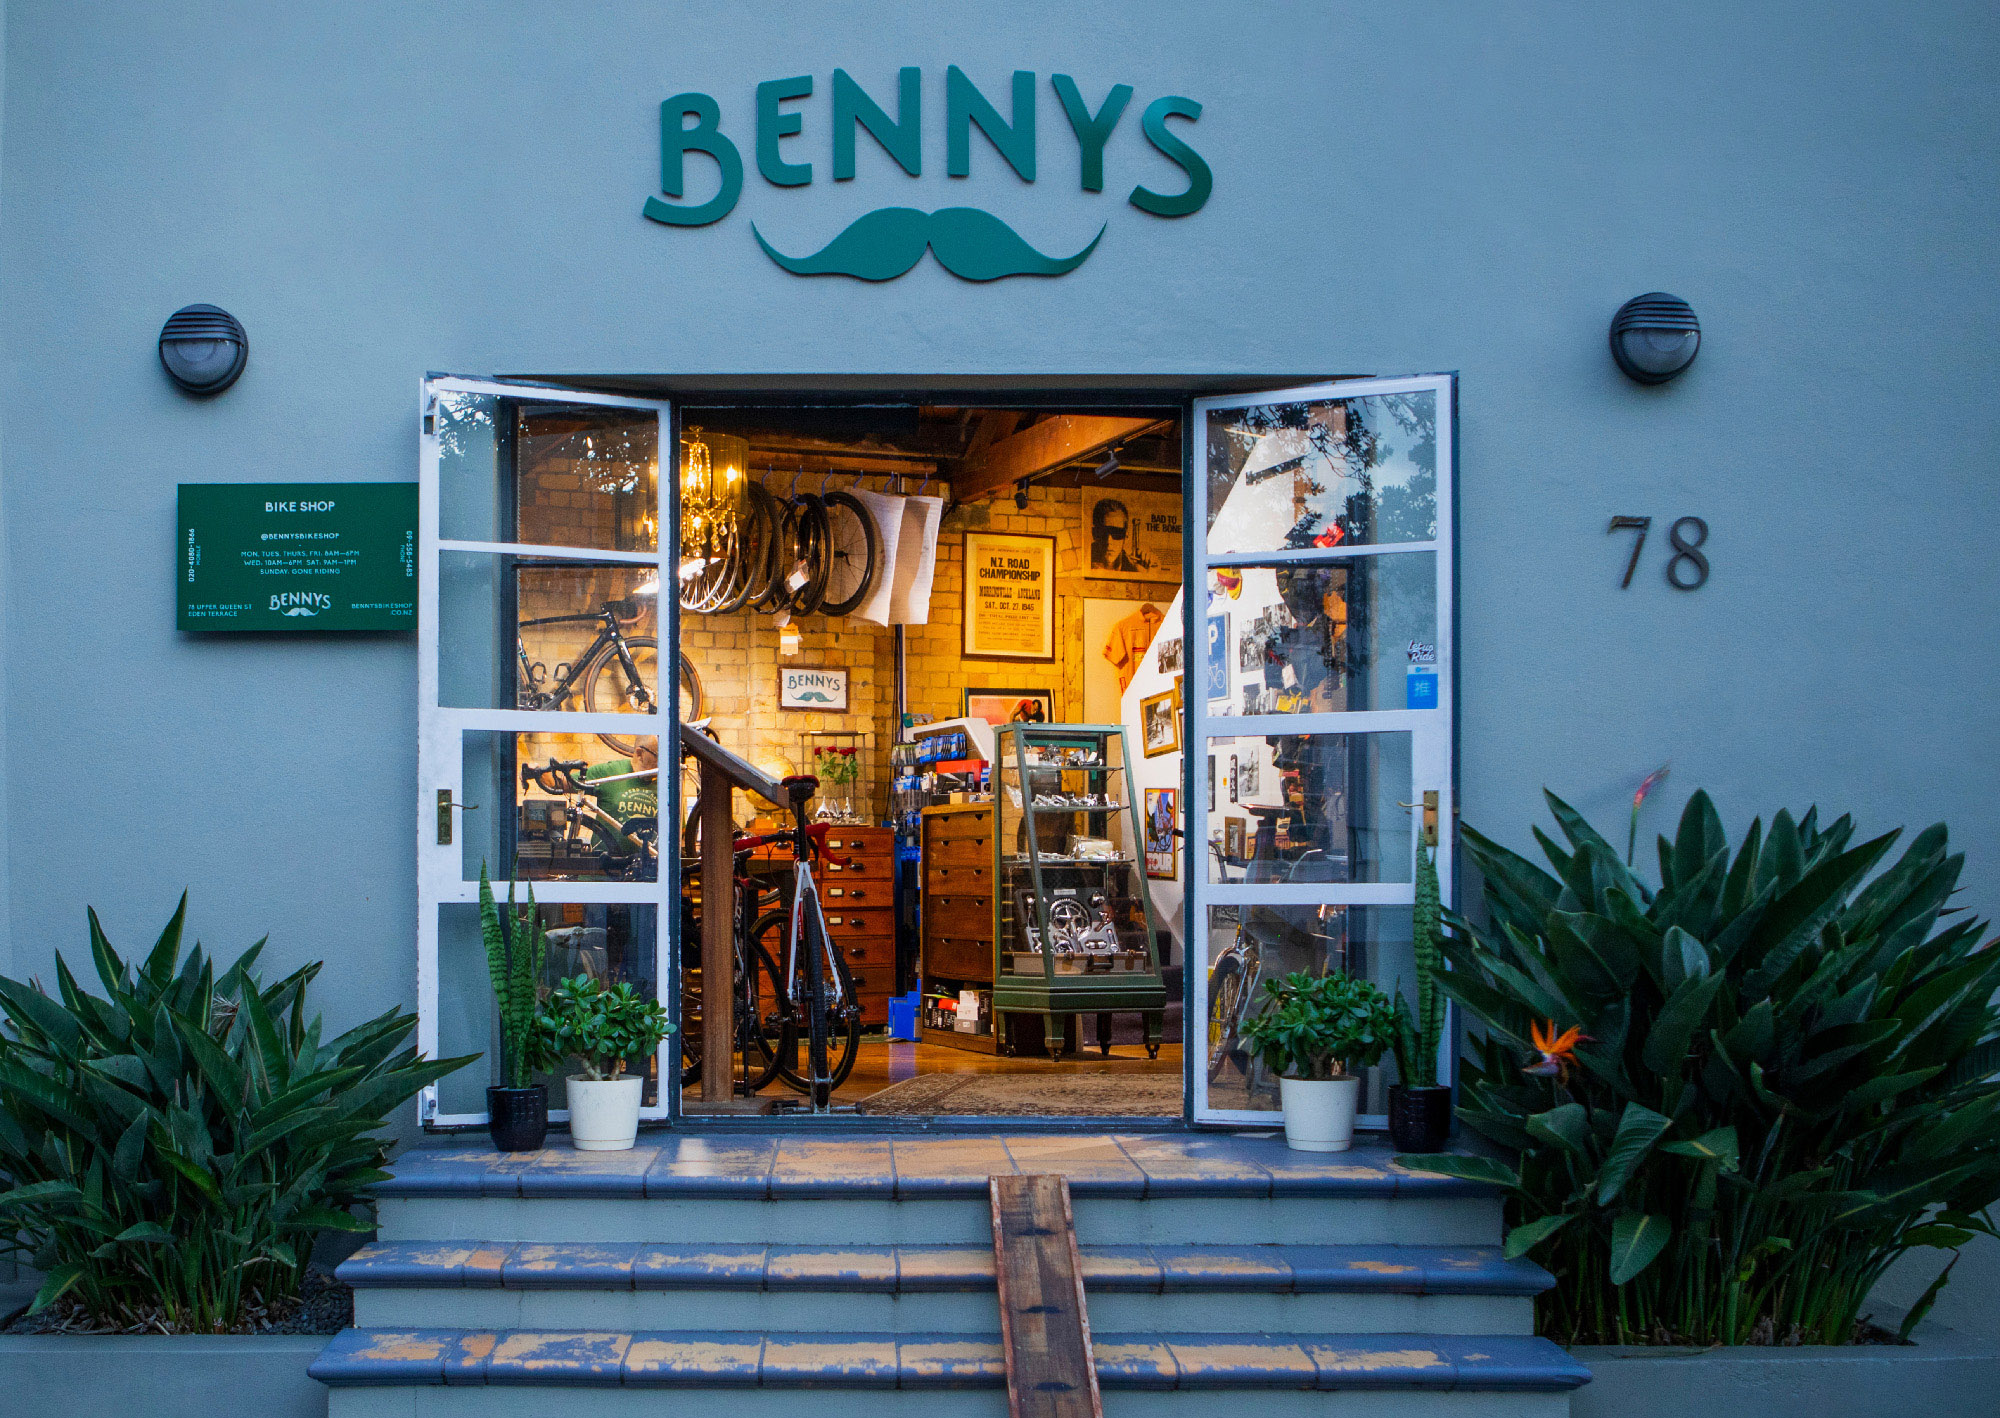 Bennys Bike Shop – Where Speed is King